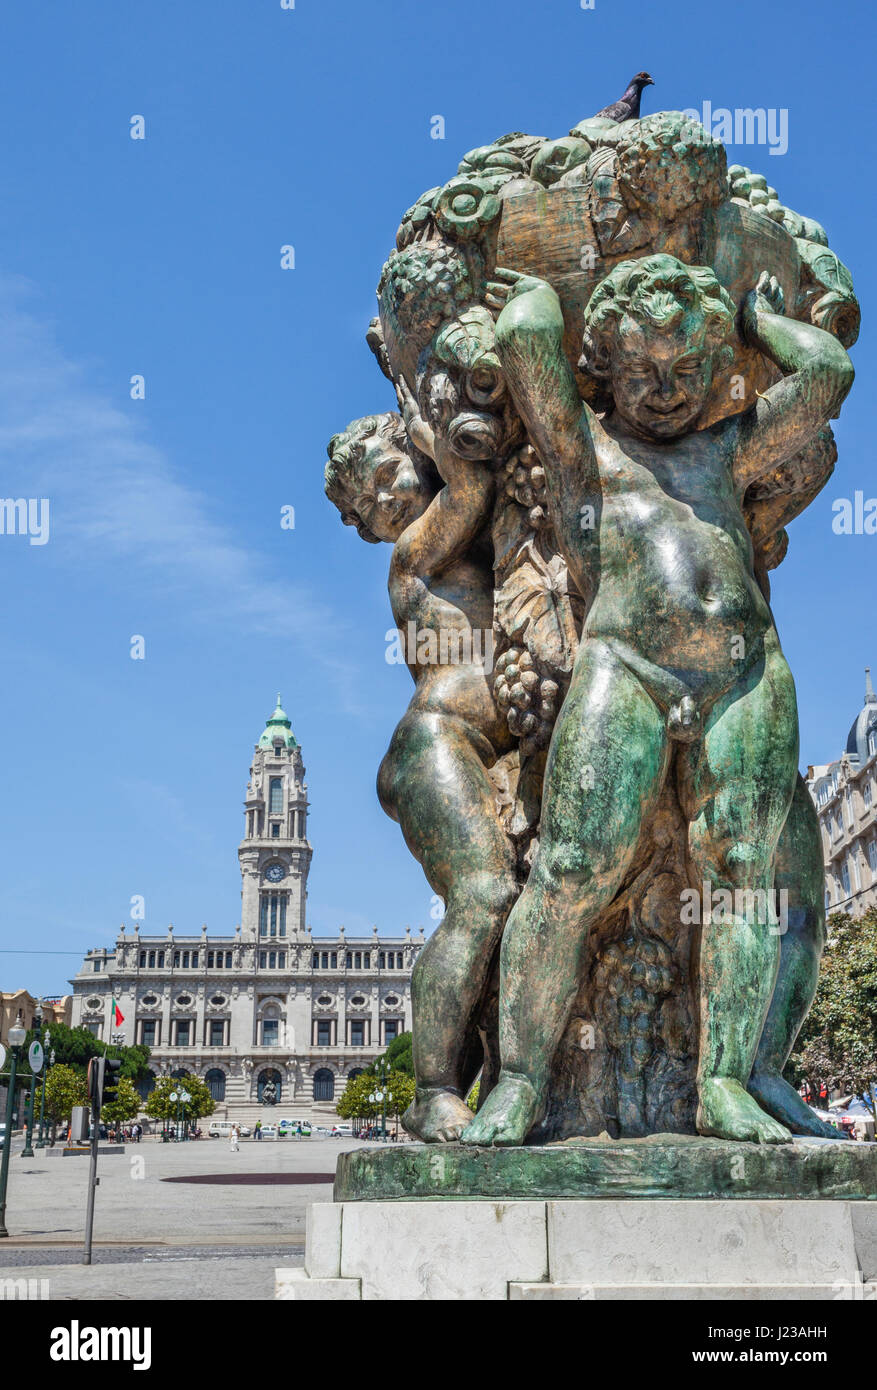 Portugal, Region Norte, Porto, bronce sculpture 'Children of Abundance' (Meninos - A Abundancia) by Henrique Moreira at Avenida dos Aliados, against t Stock Photo